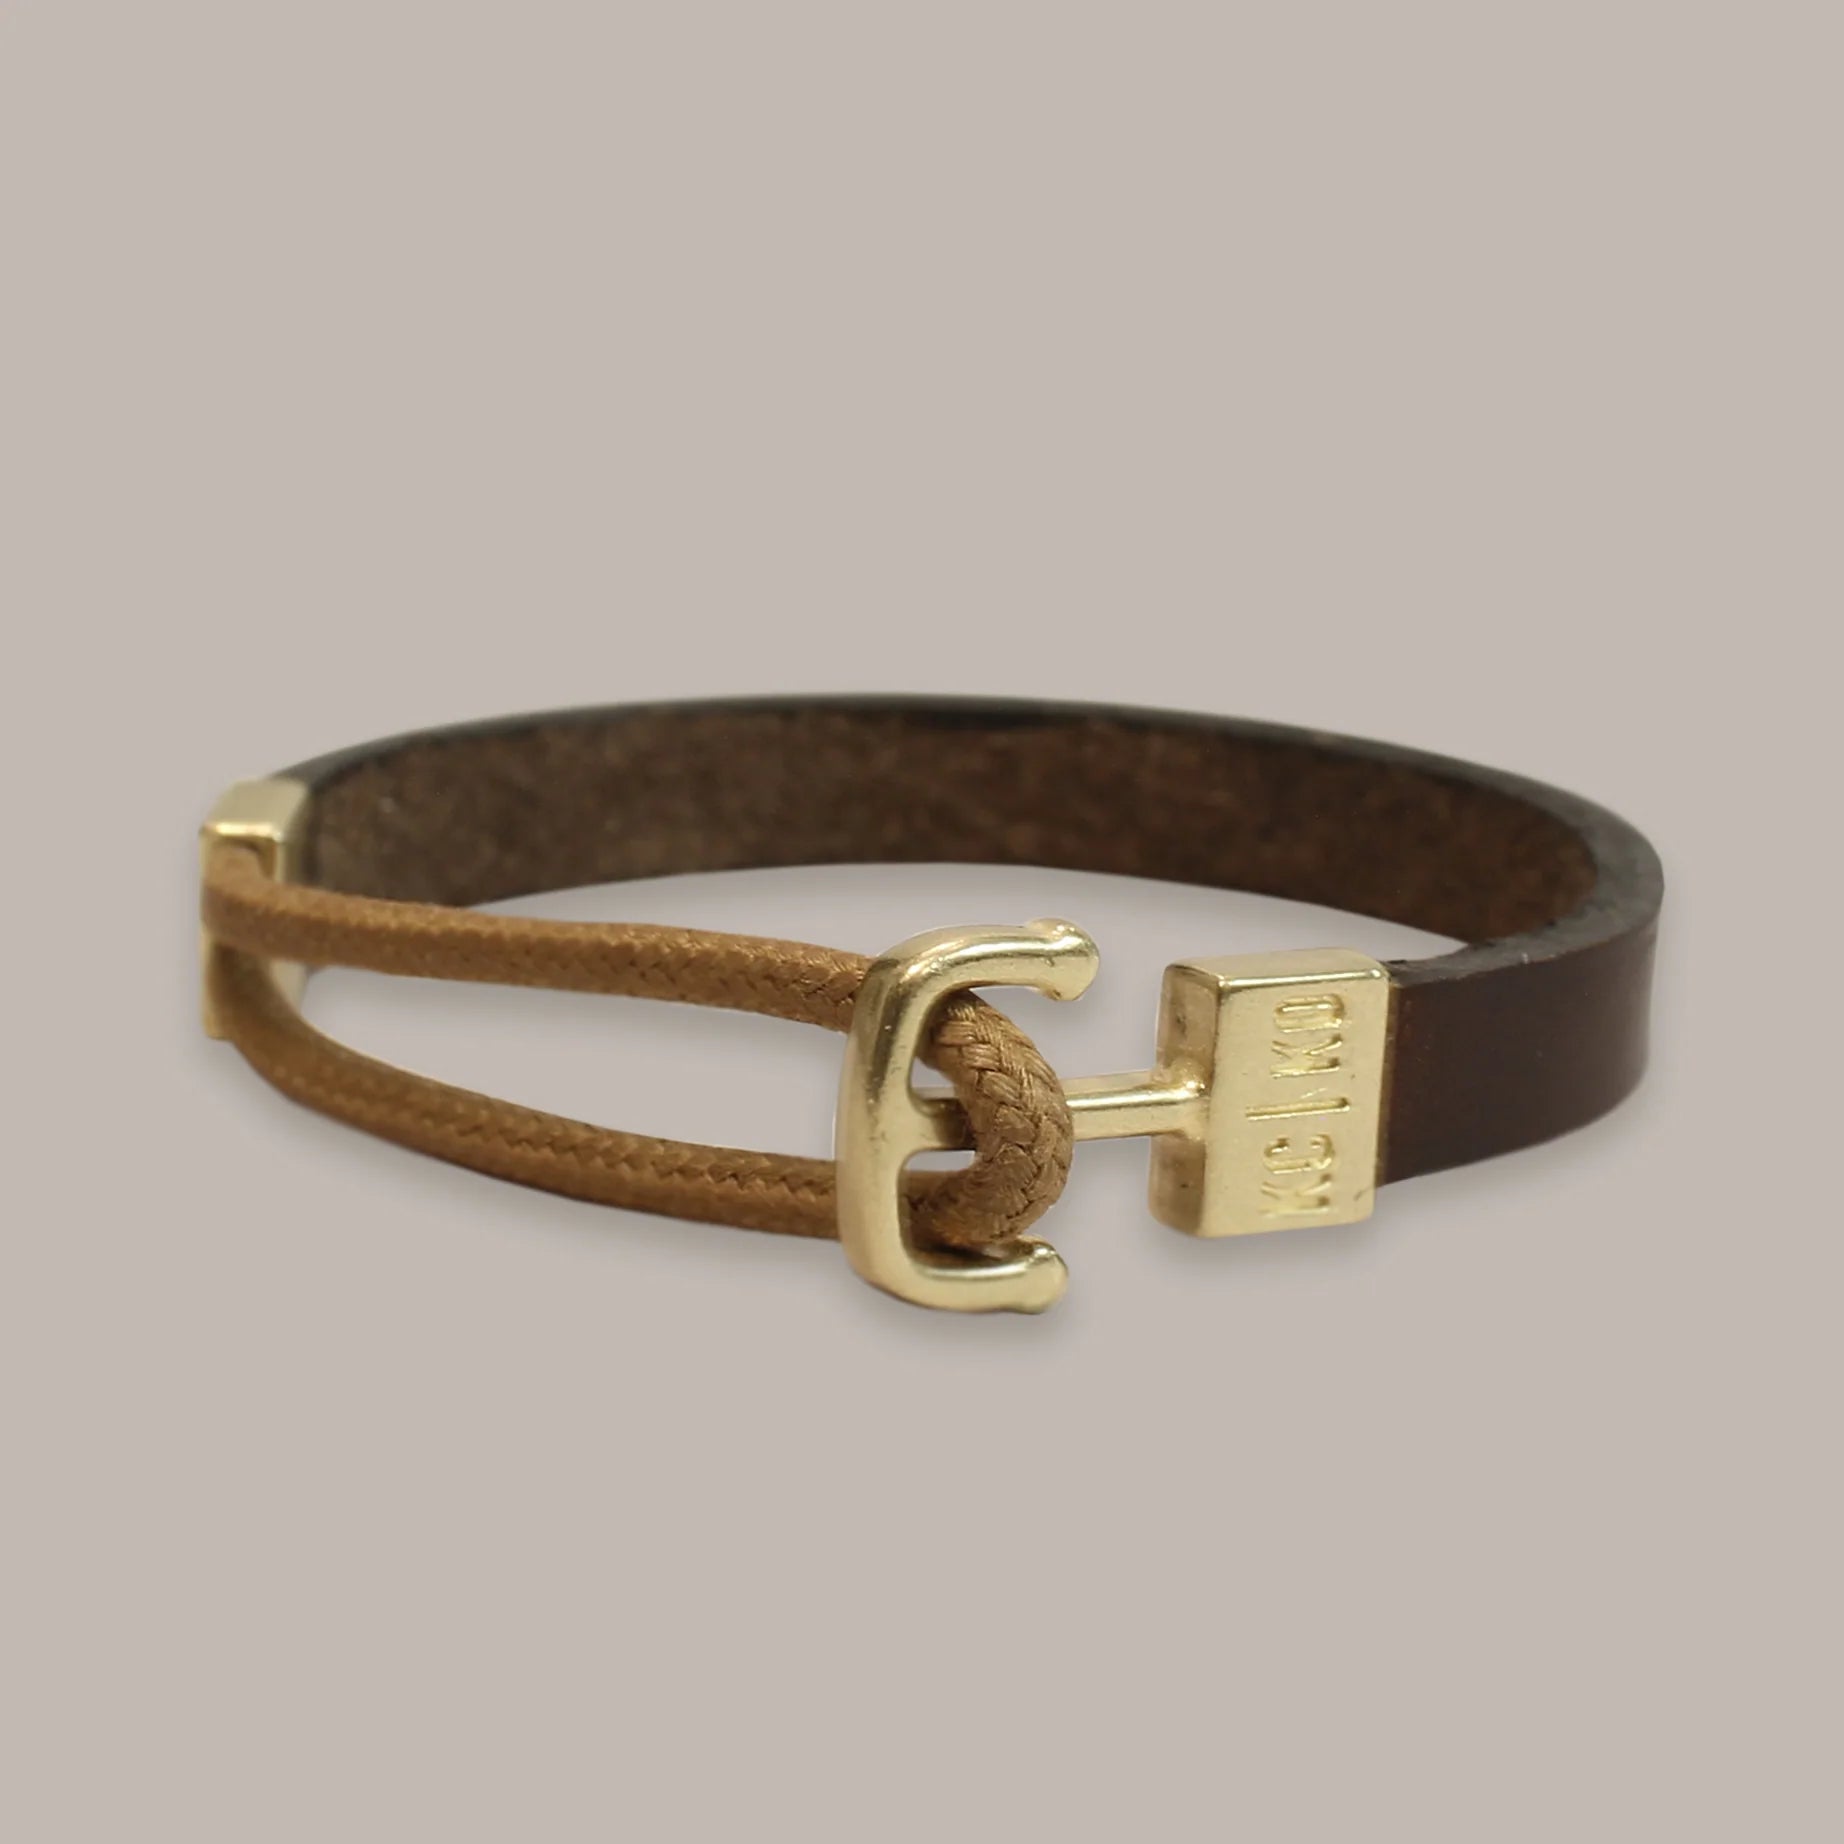 Single Wrap Leather & Cord Bracelet: Camel